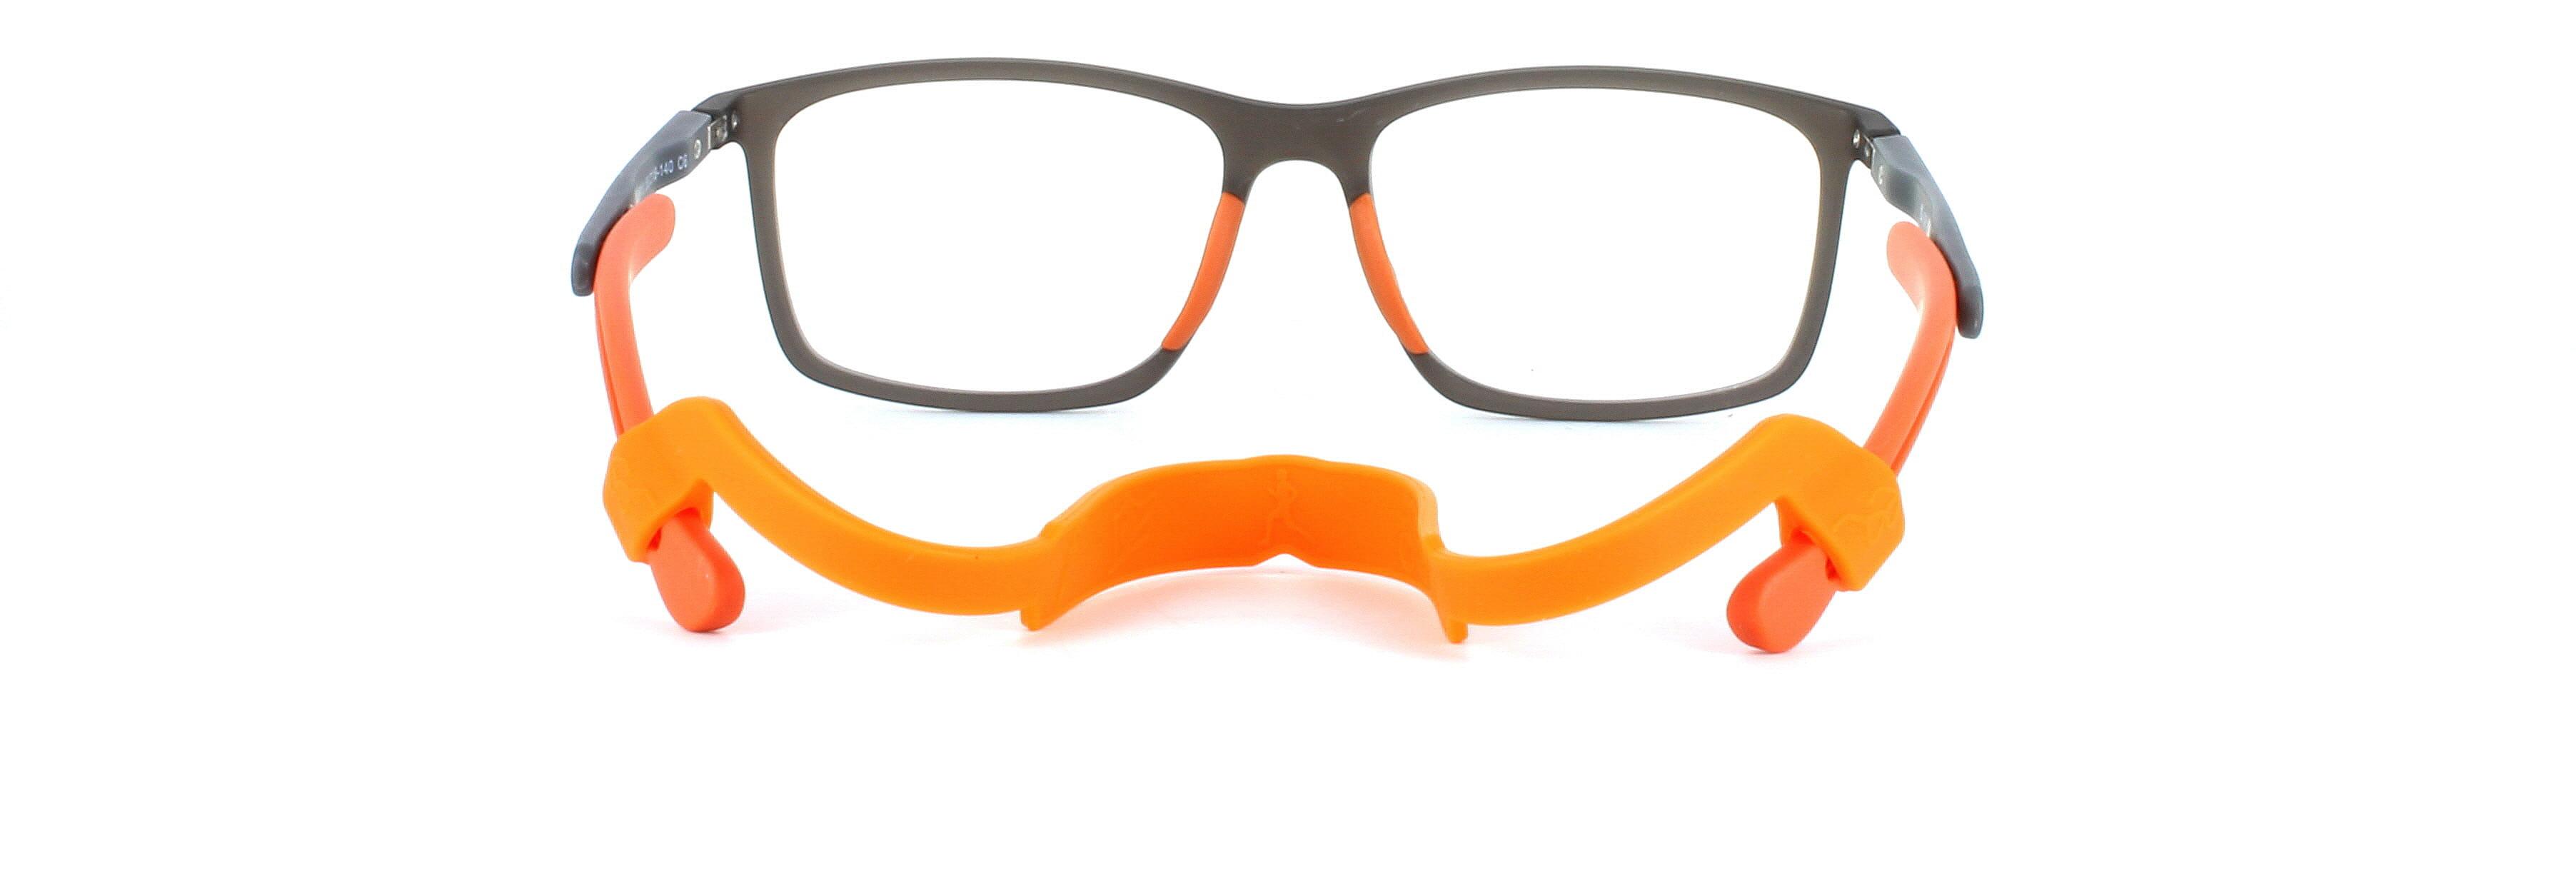 Player - Gents prescription sports glasses - grey and orange - image 3